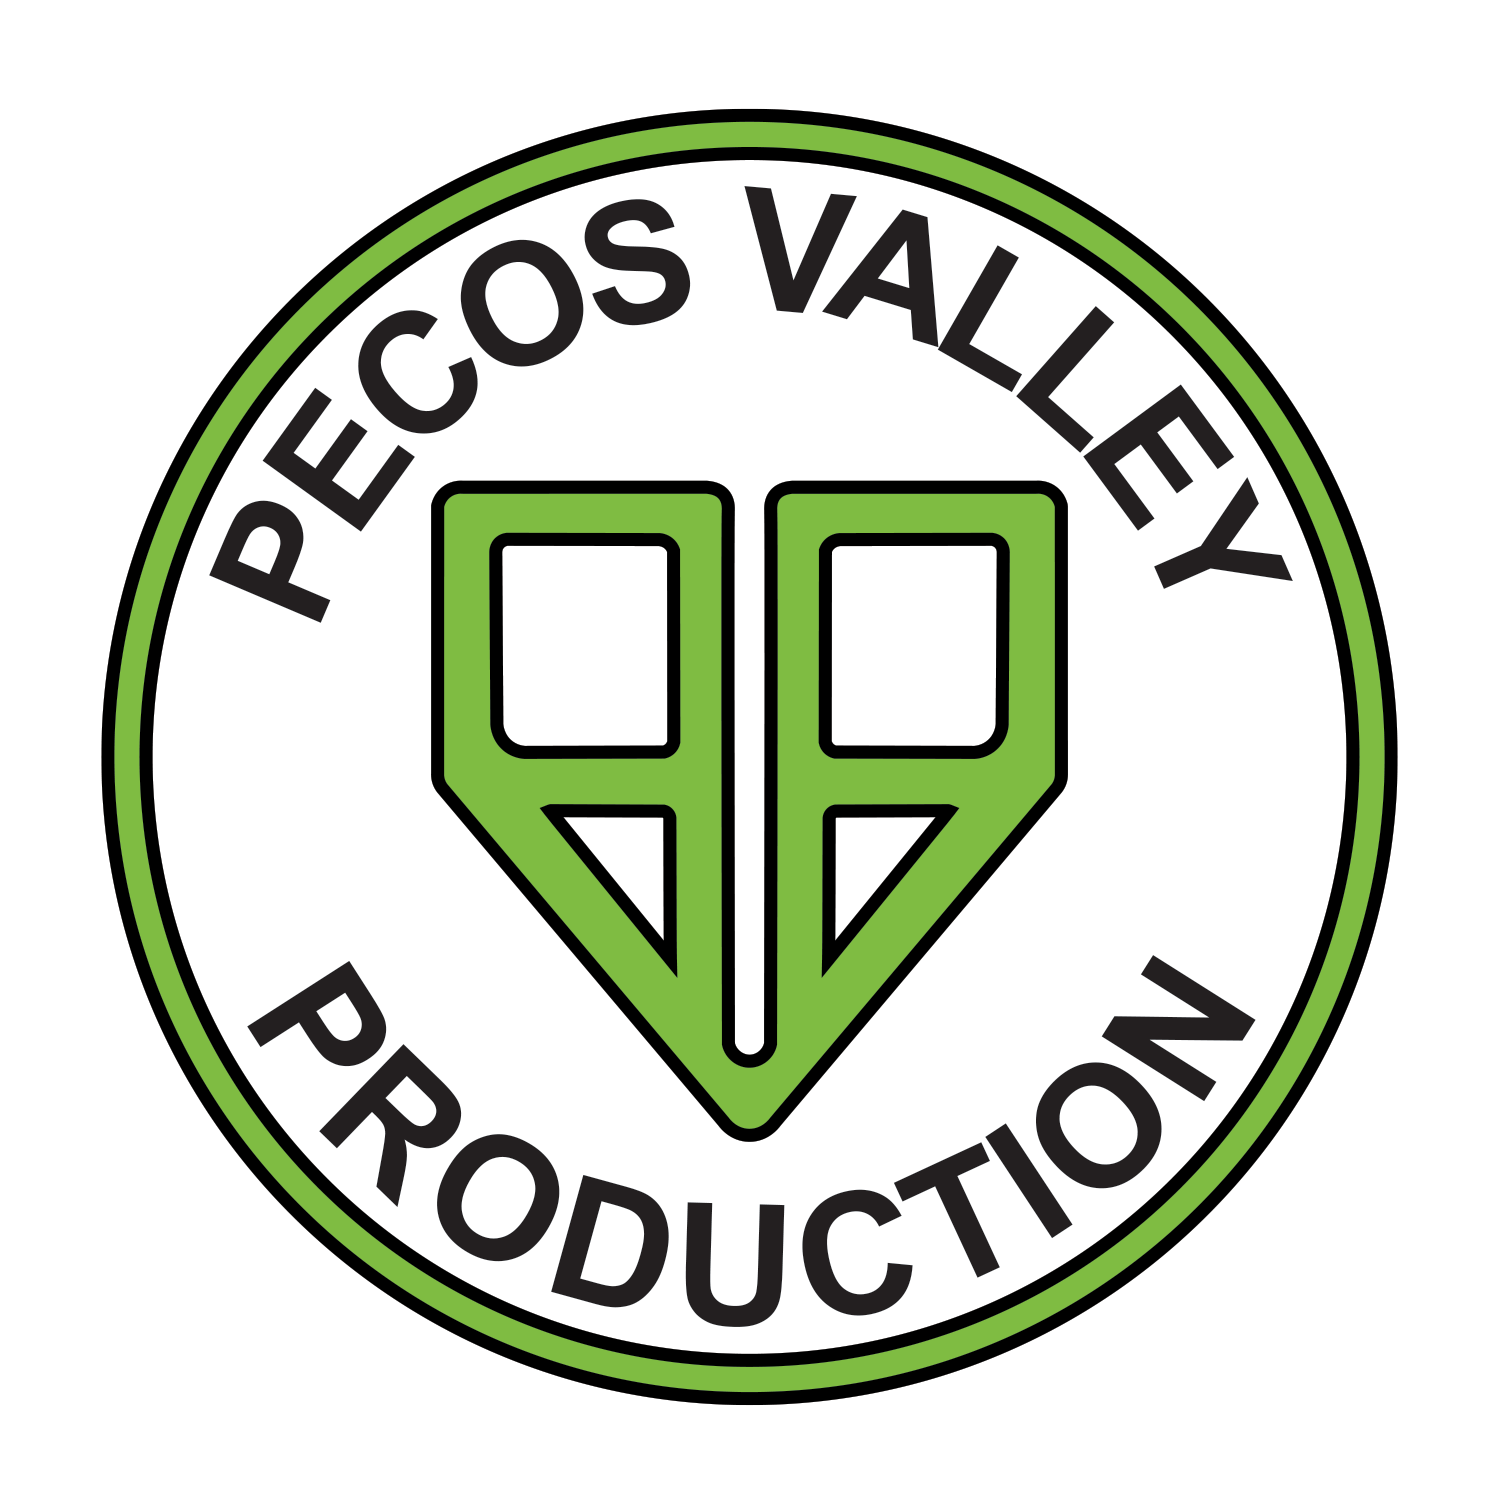 Pecos Valley Production - Ruidoso-logo